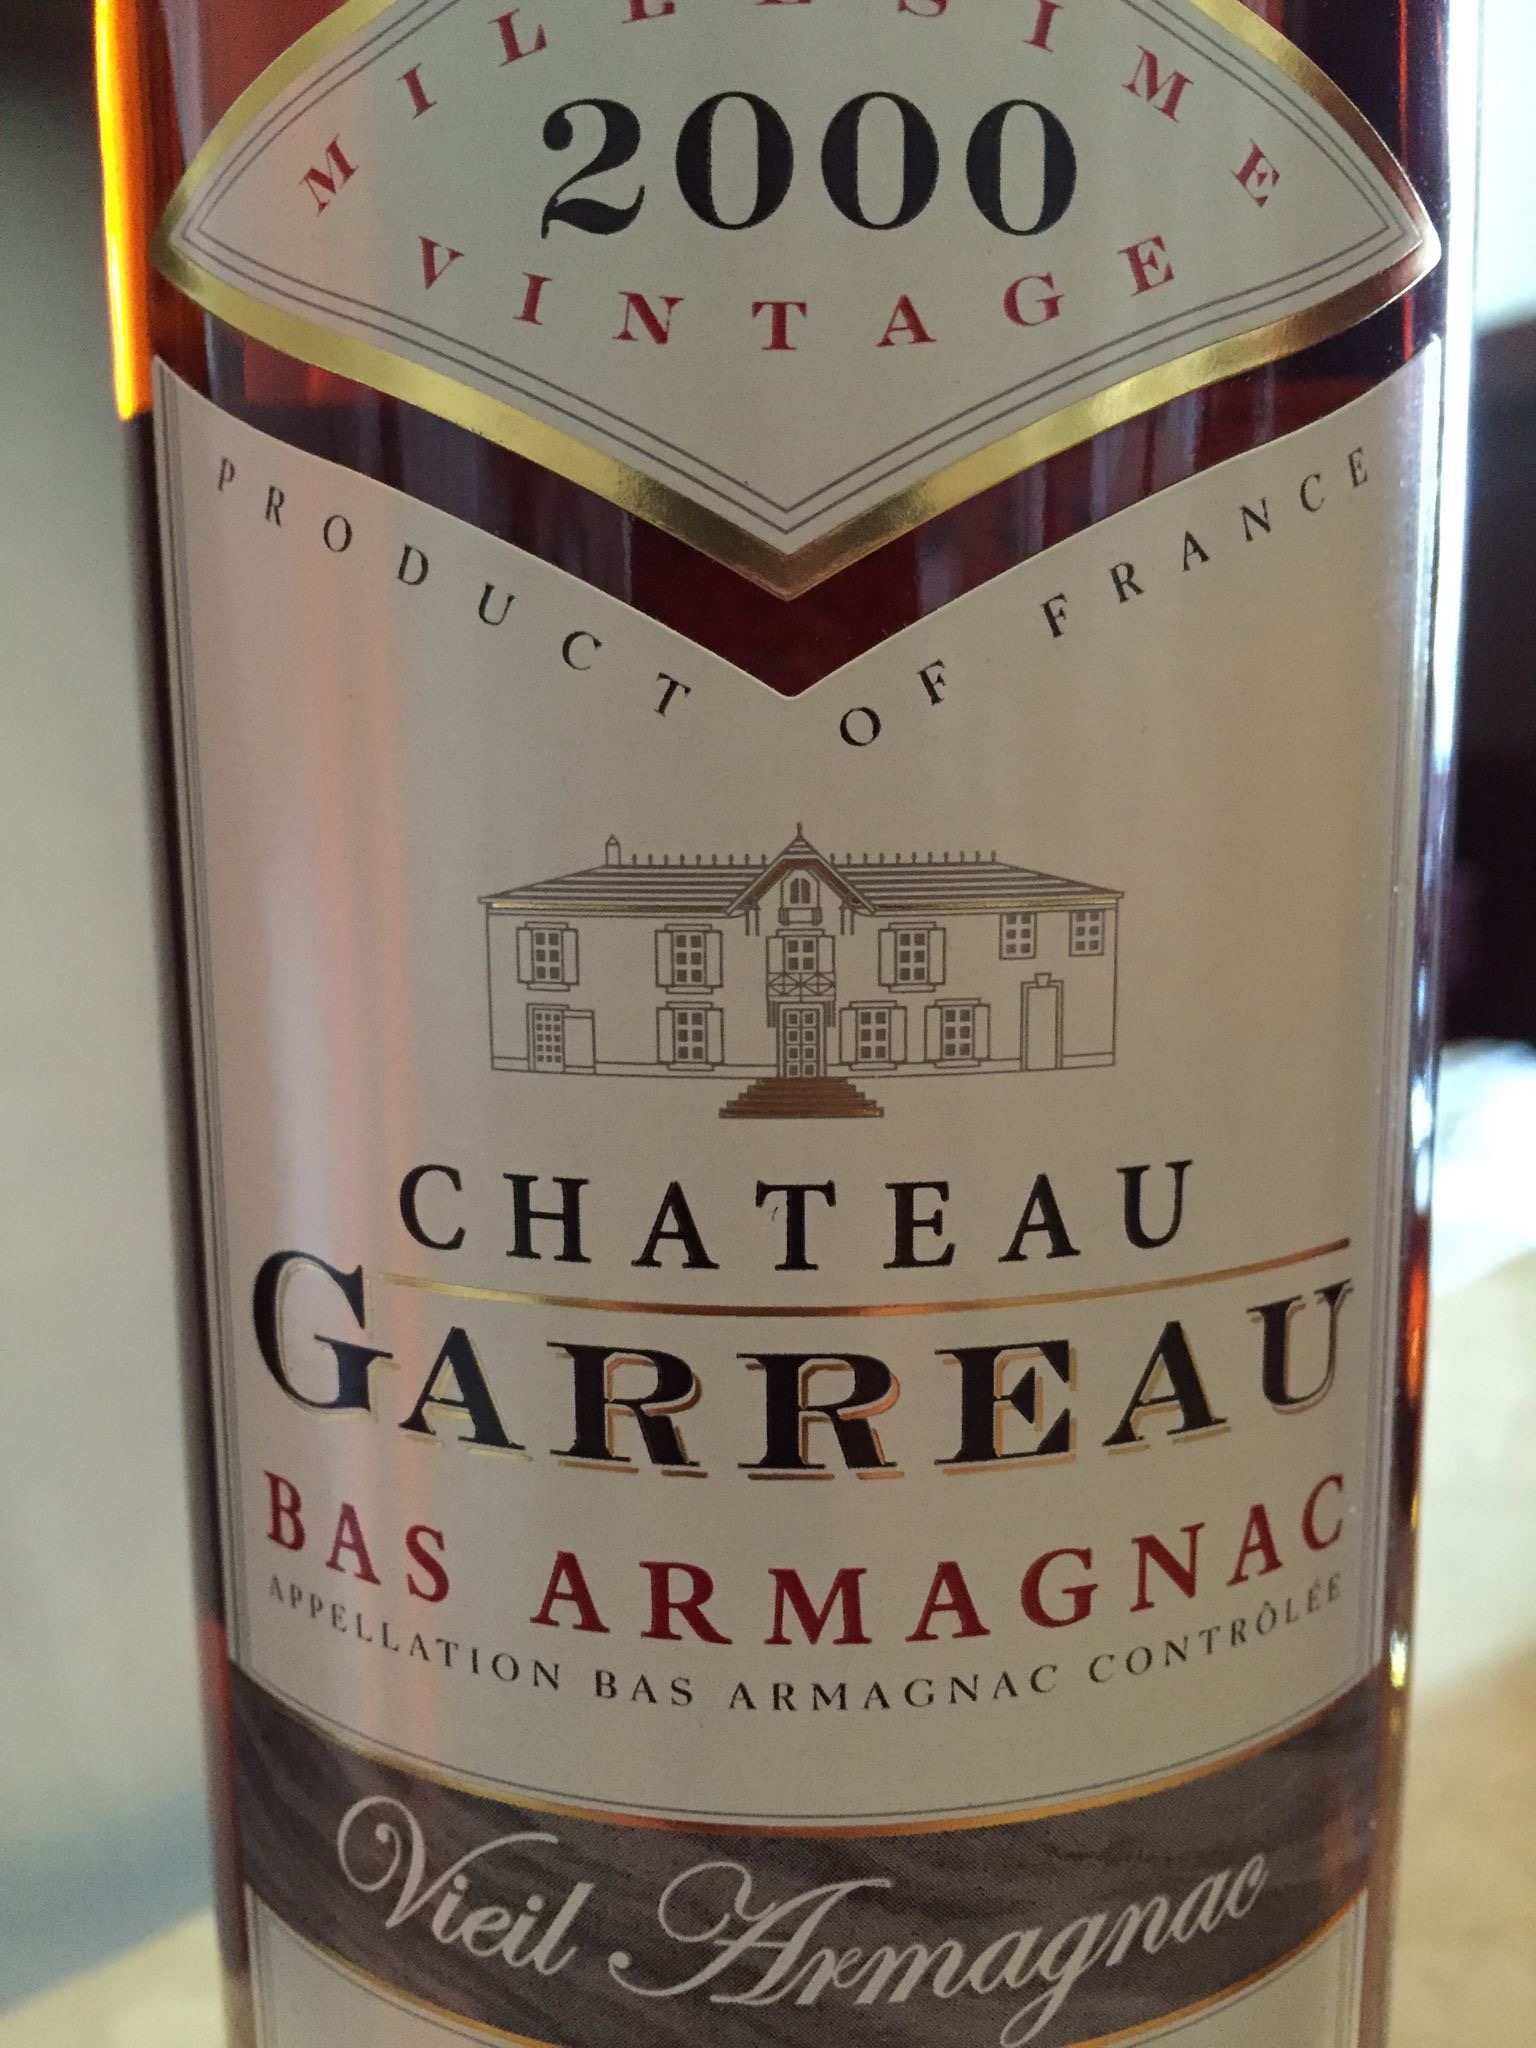 Château Garreau 2000 – Bas-Armagnac – Viel Armagnac